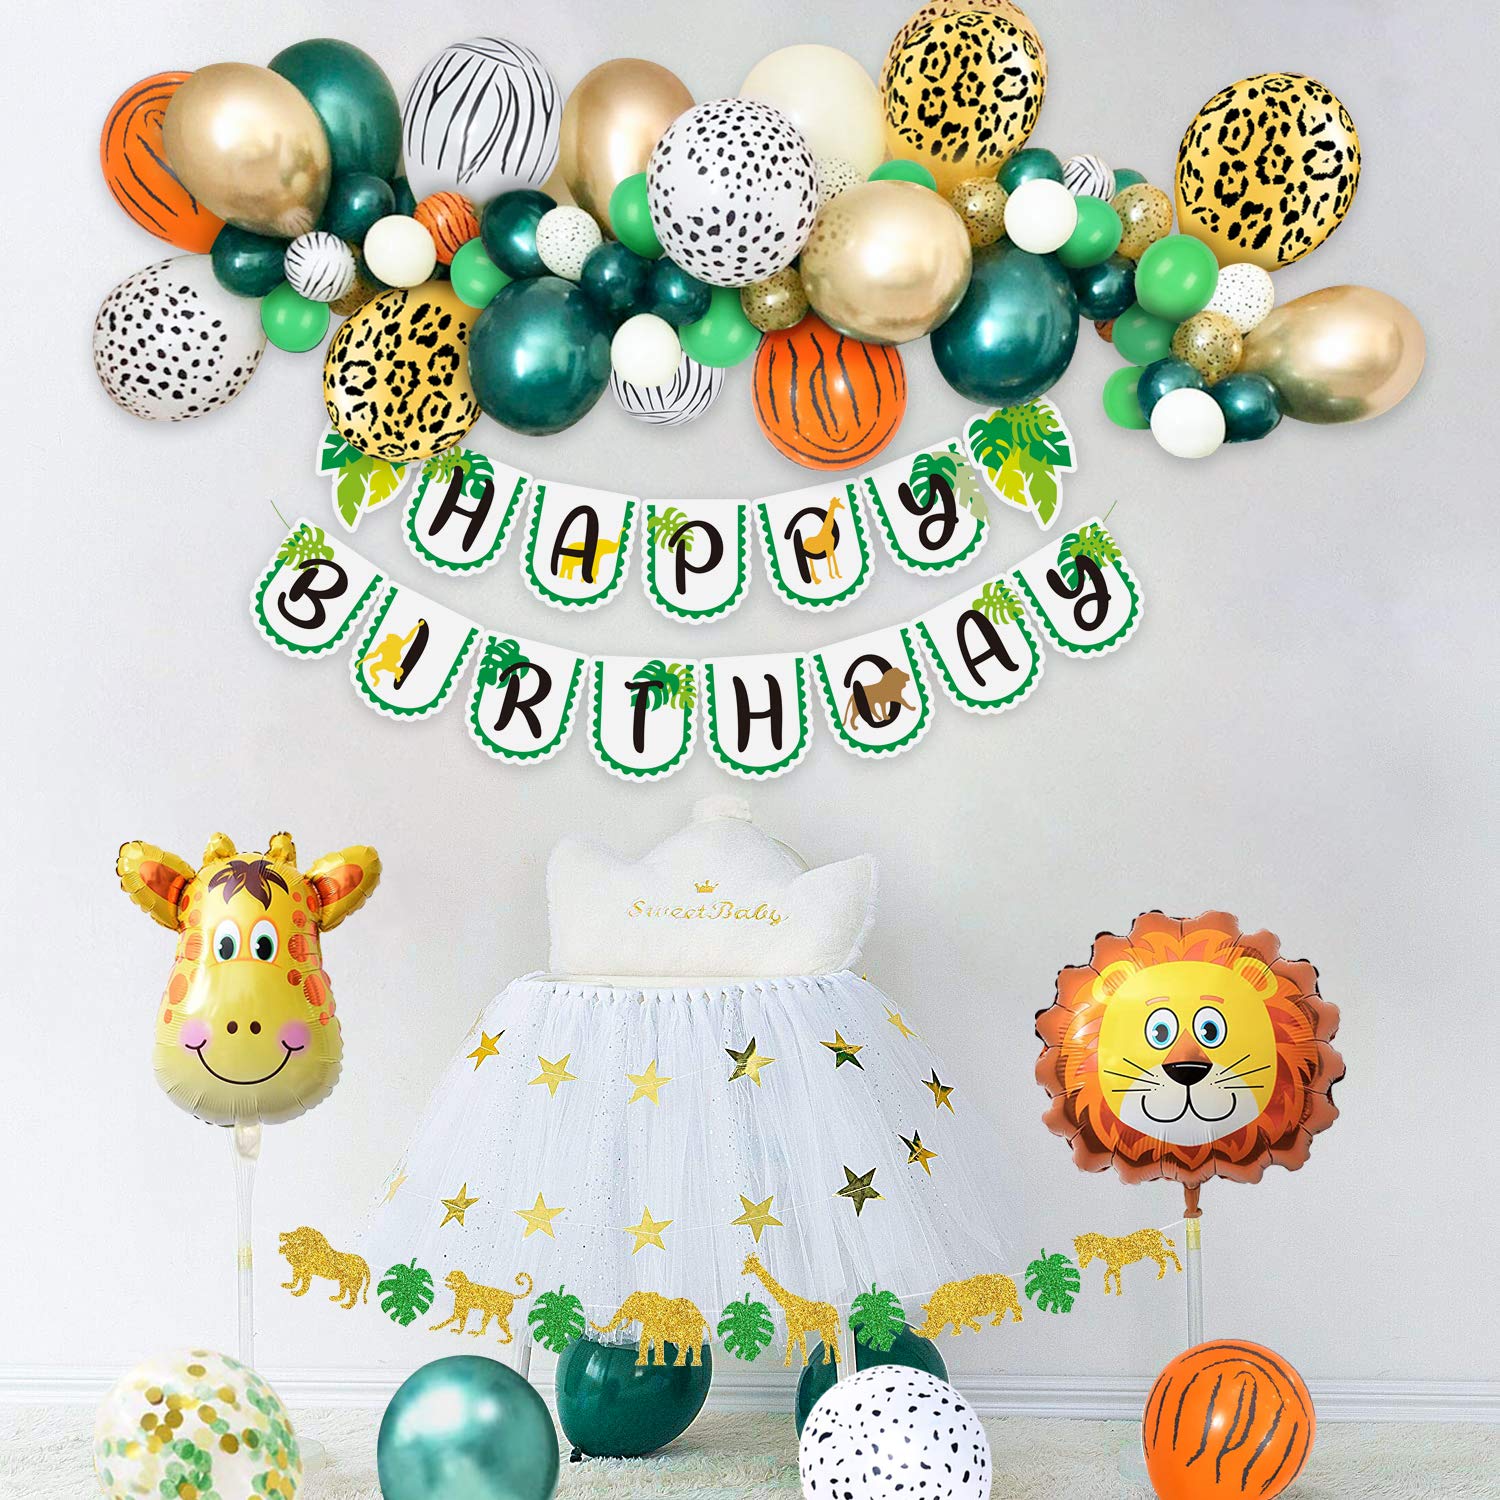 NAIWOXI Safari Birthday Decorations 90PcsSet Jungle Theme Party Supplies Set Including Animal Foil Balloons, Foil Curtains, Cake Toppers, Banner, Jungle Balloon Garland Kit, Safari Baby Shower